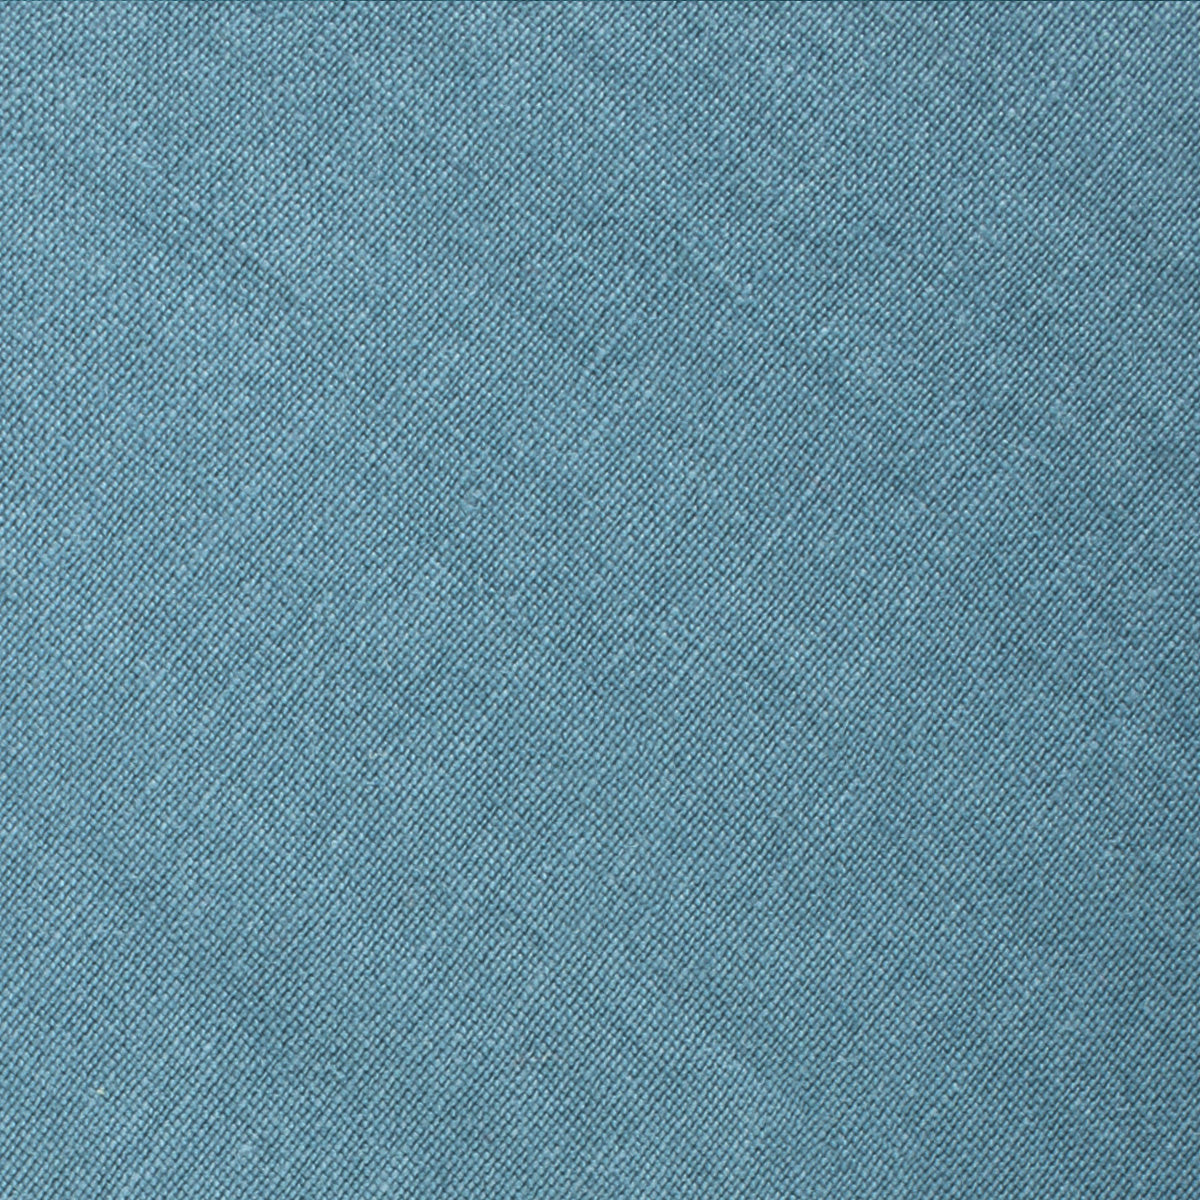 Dusty Teal Blue Linen Skinny Tie Fabric